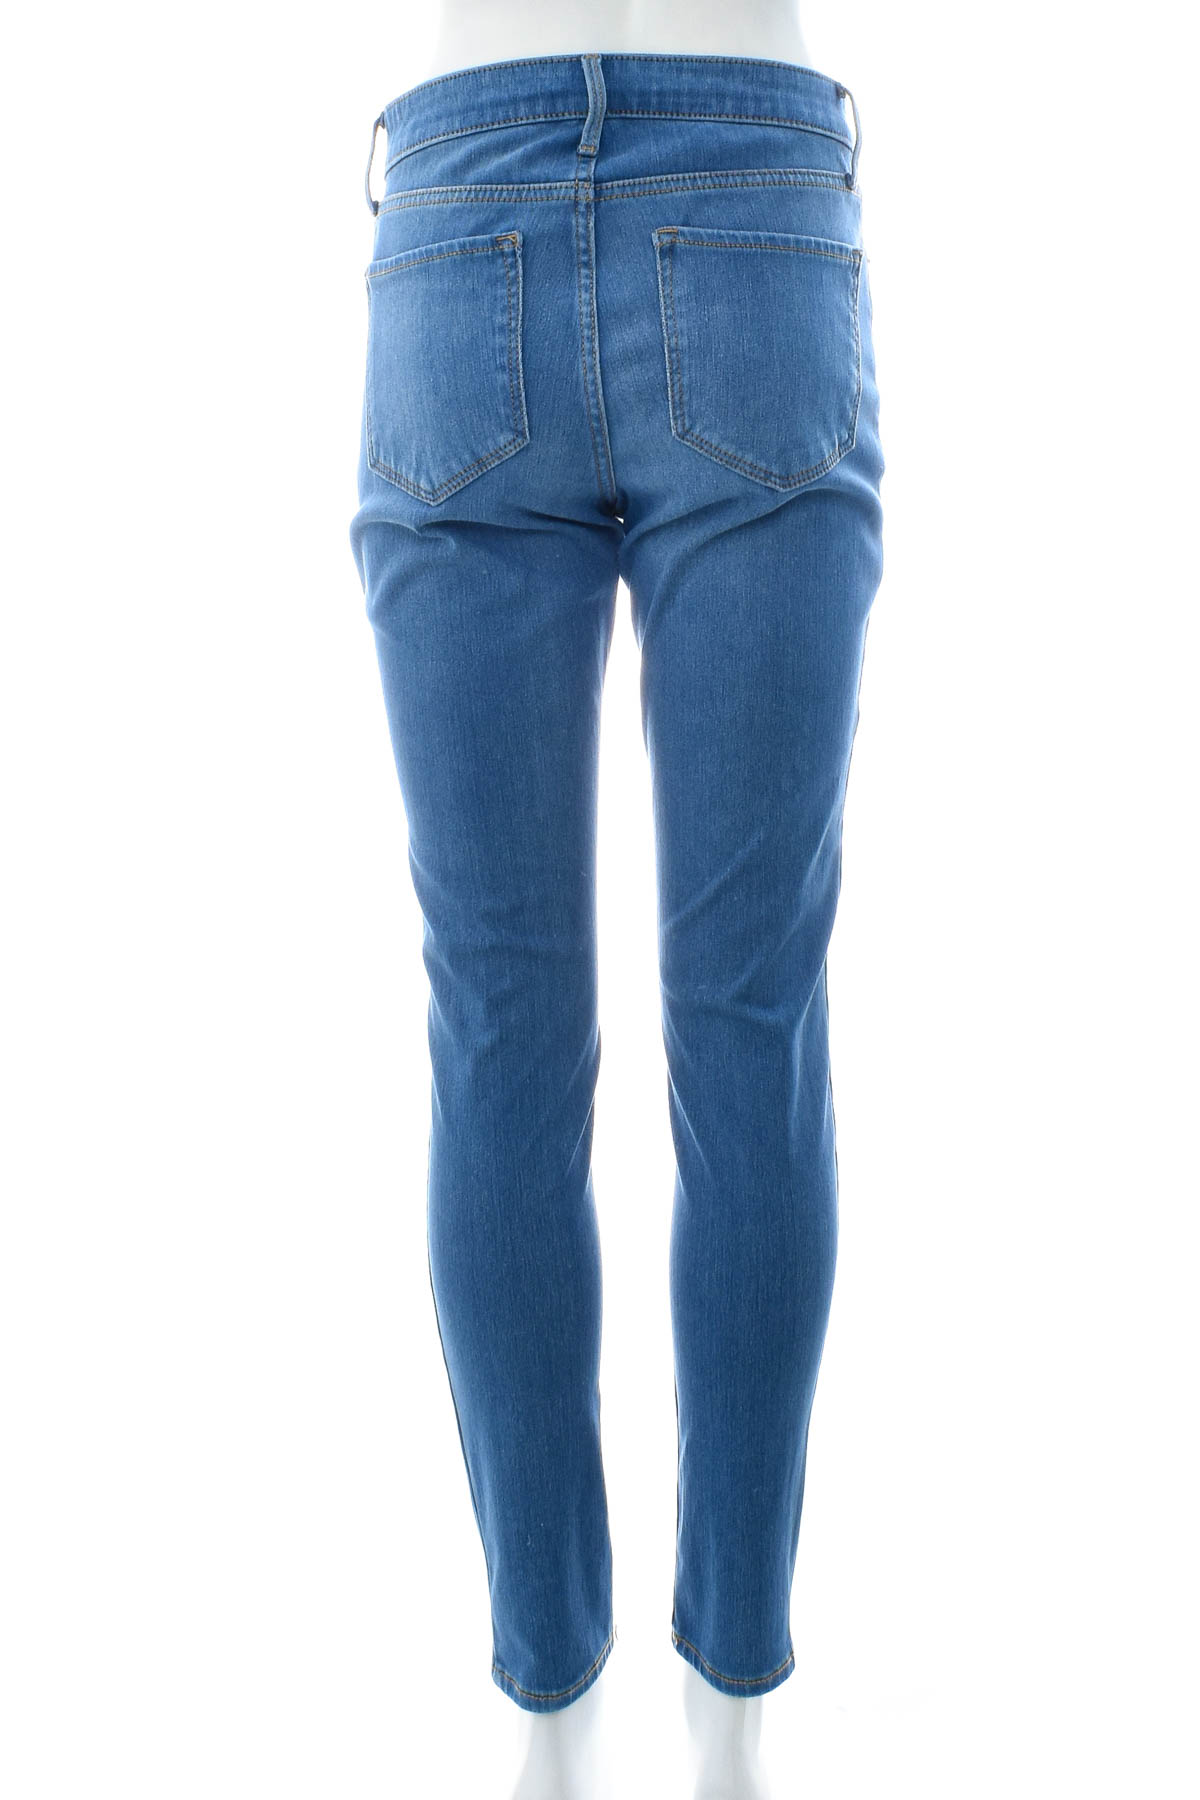 Women's jeans - OLD NAVY - 1